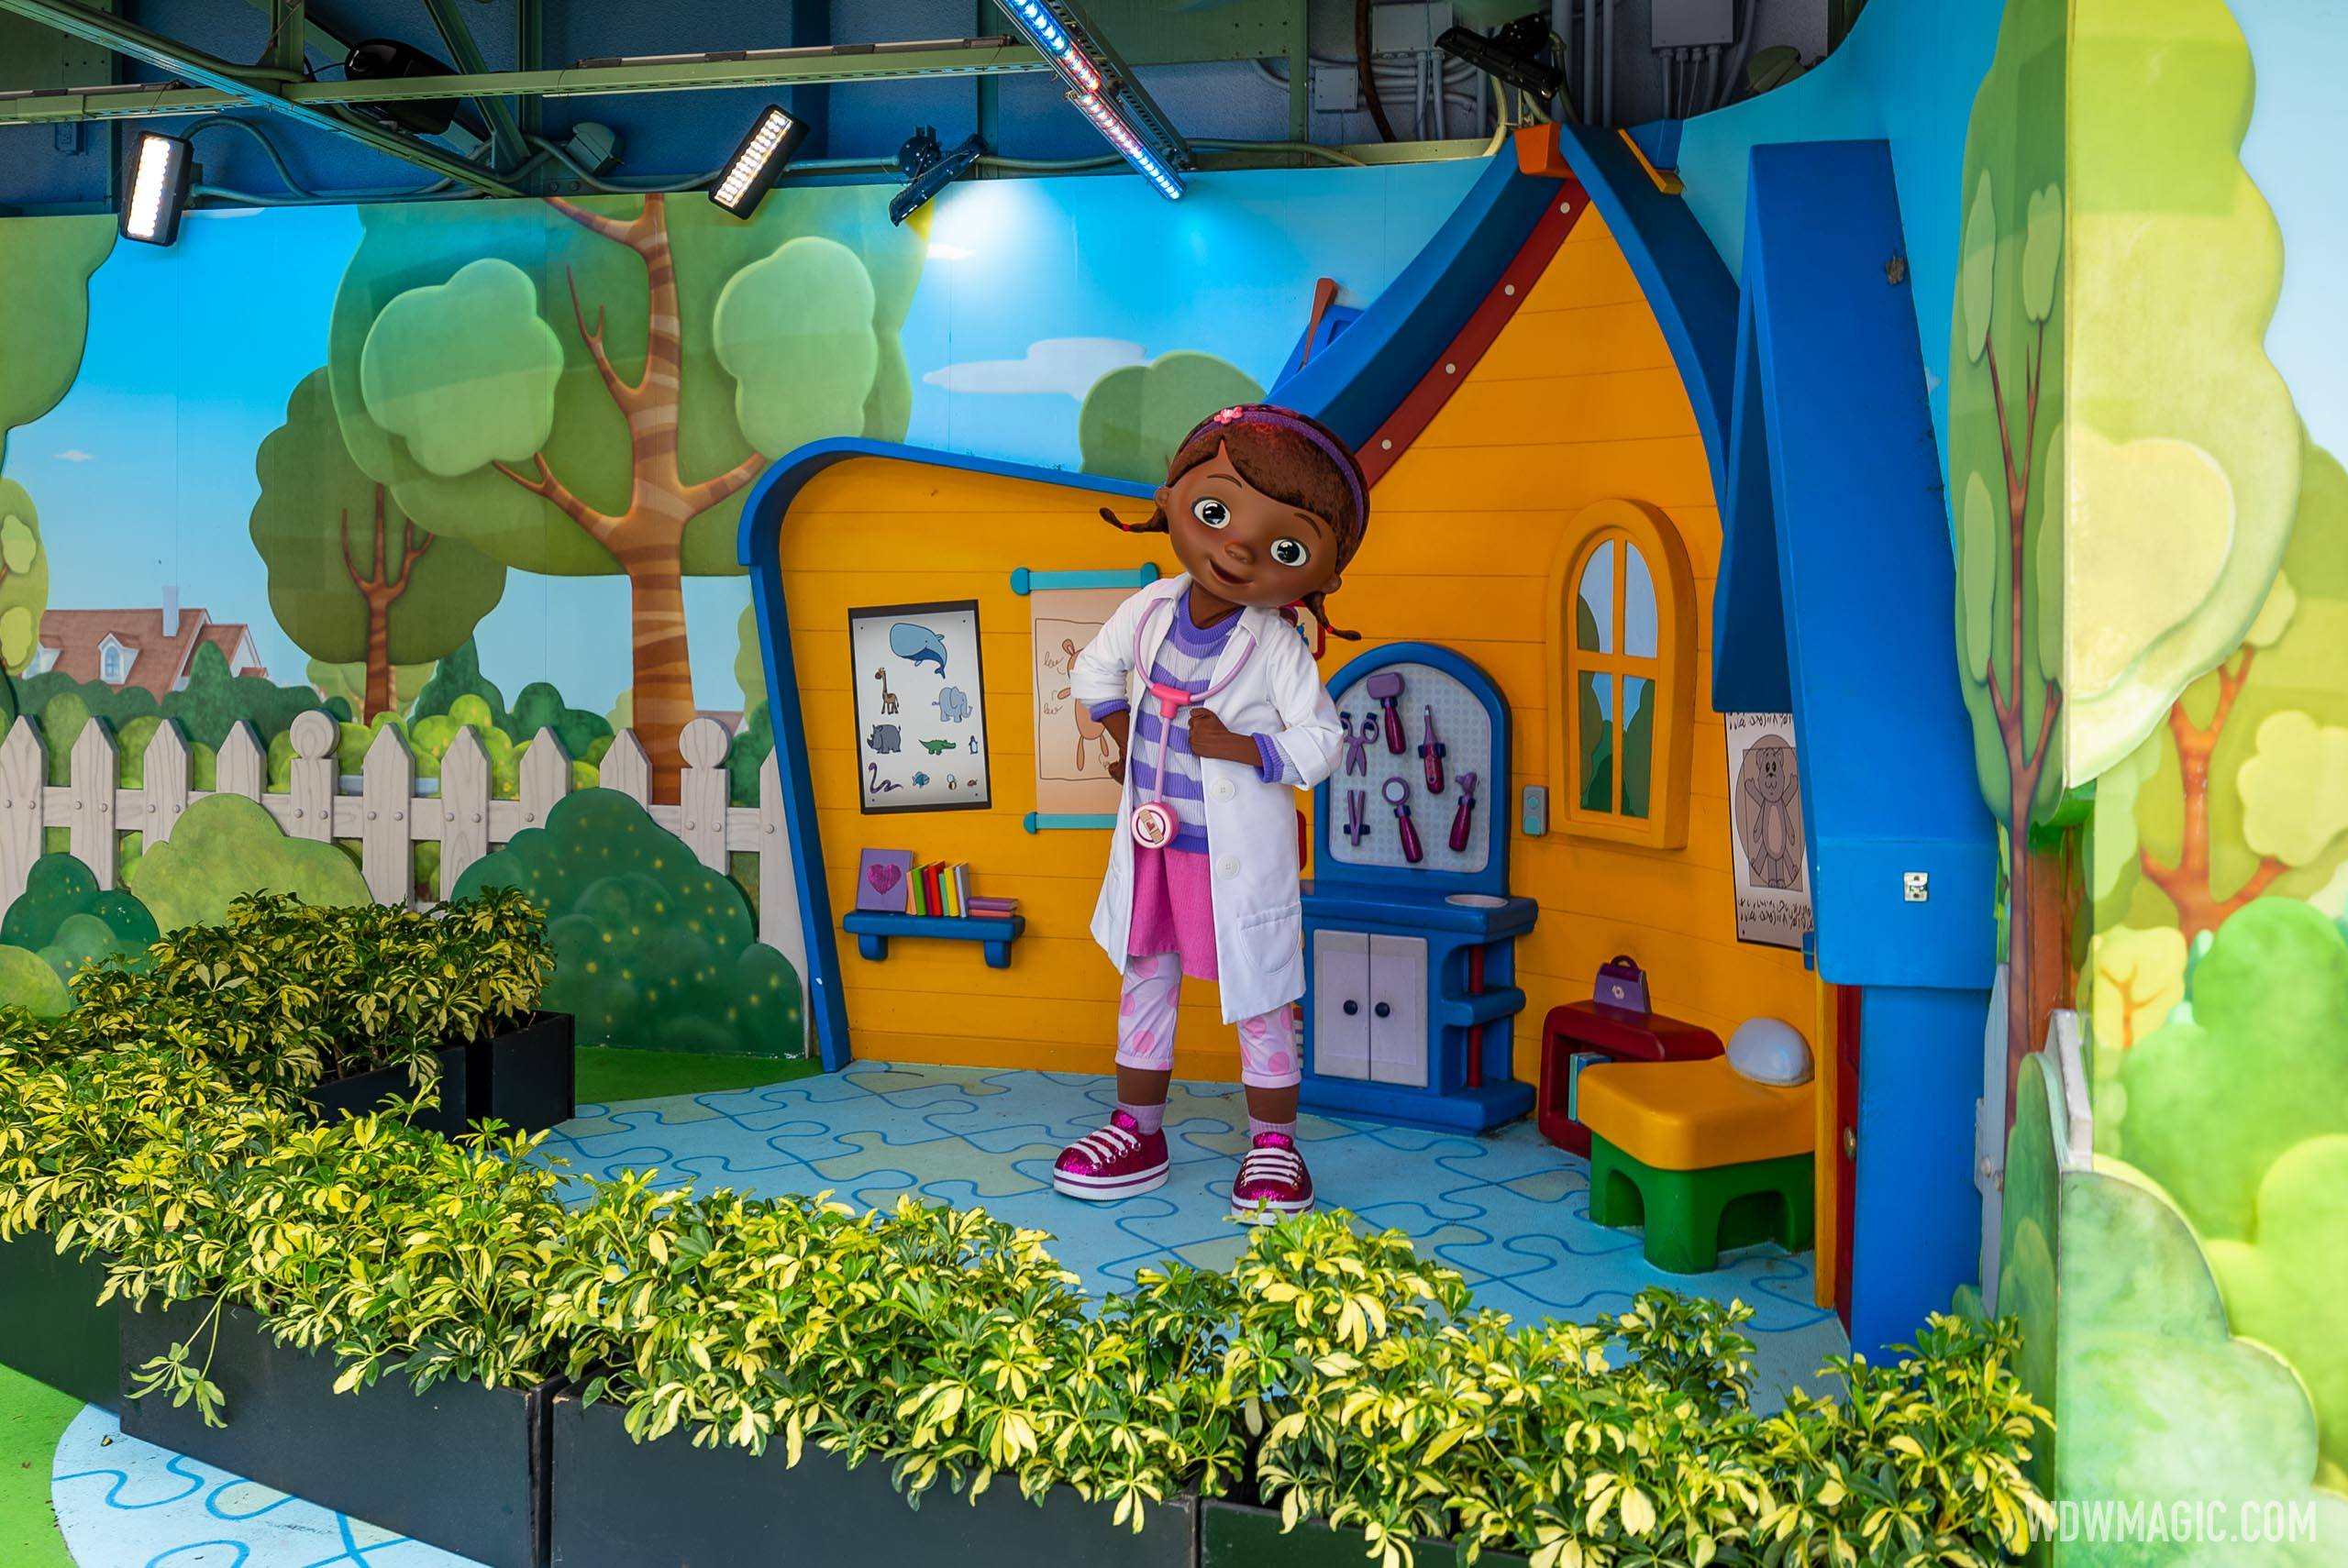 Disney Junior meet and greet in Animation Courtyard